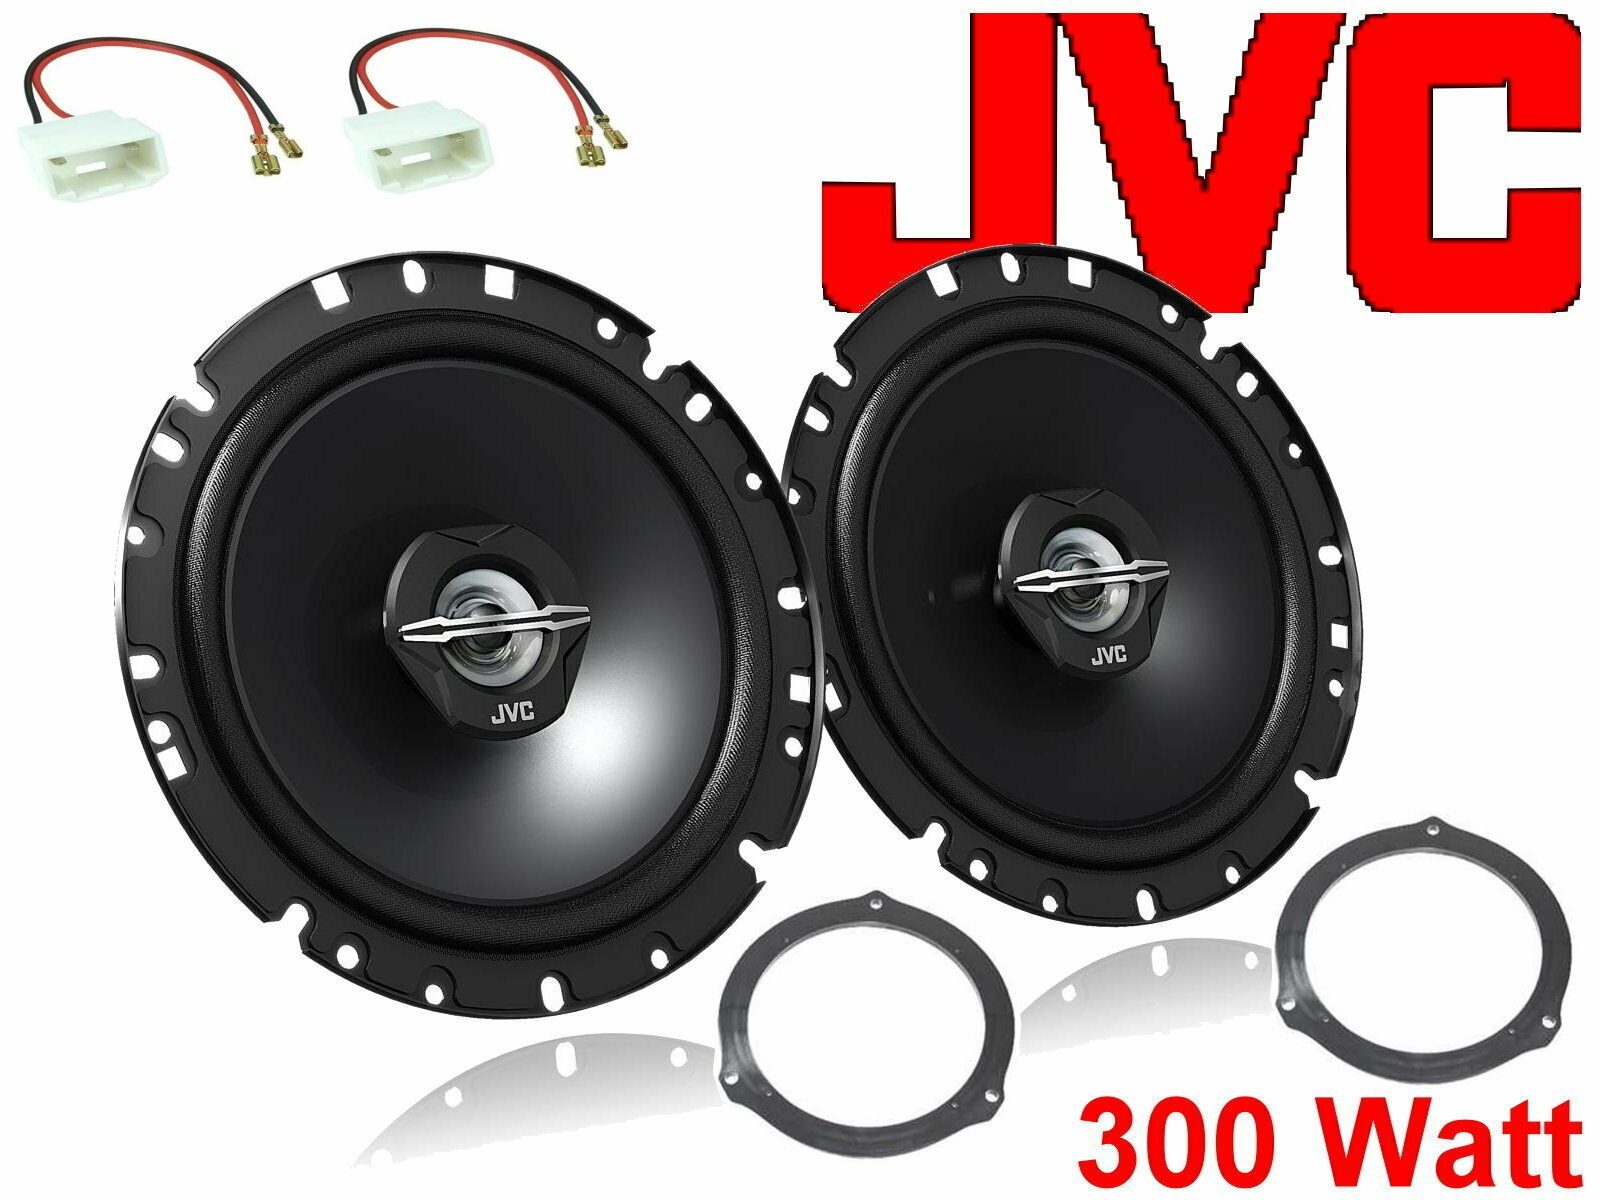 DSX JVC passend für Ford Bj WA6 Lauts (30 Auto-Lautsprecher W) Galaxy -21 05/06